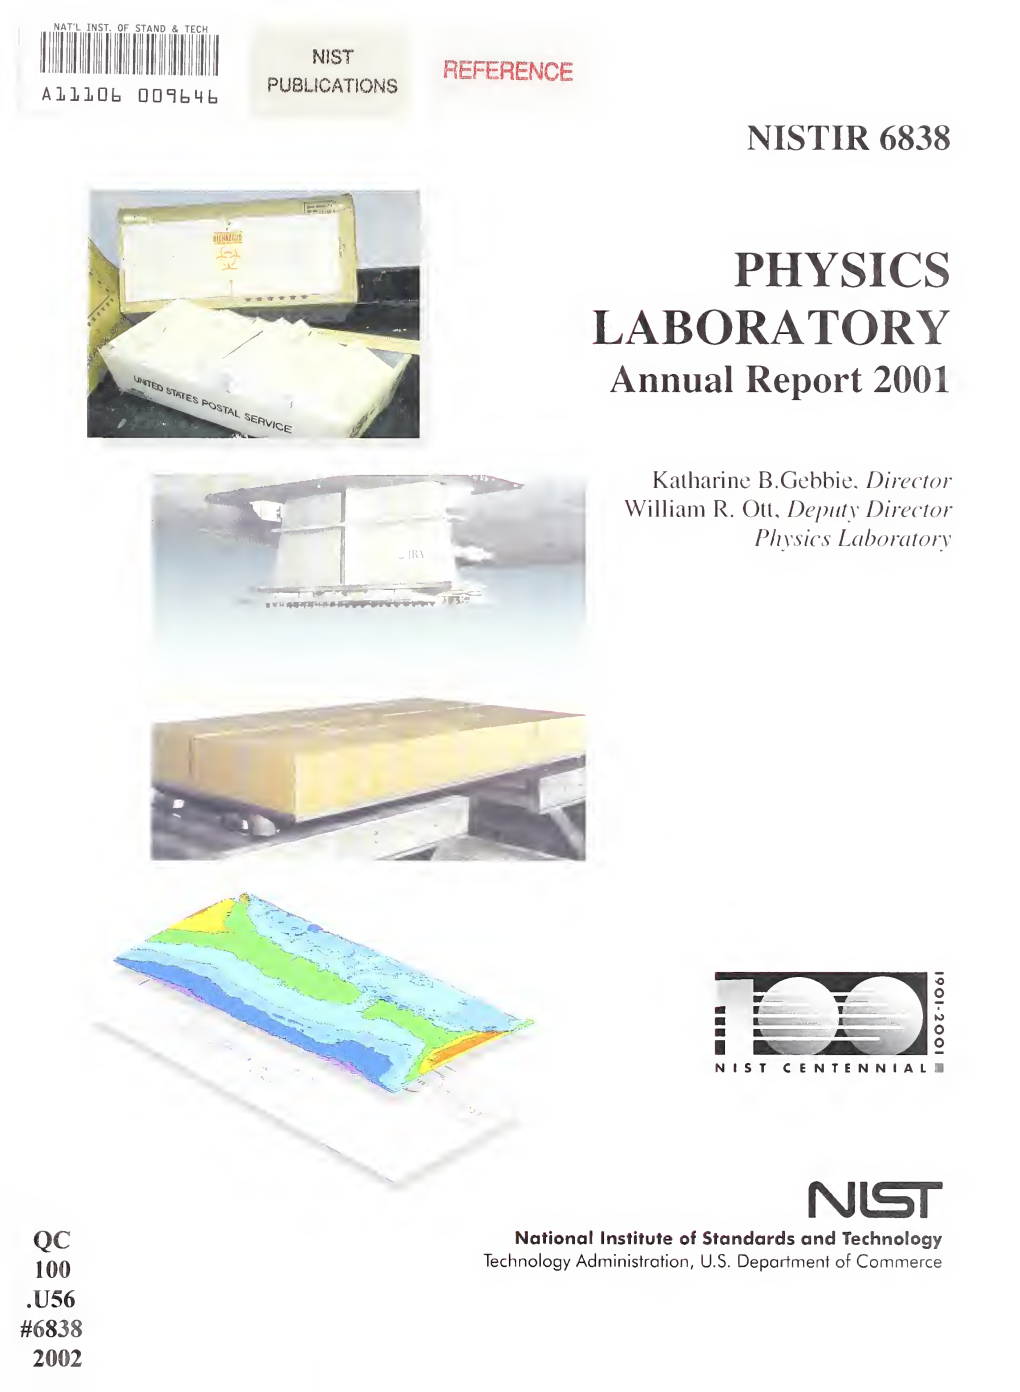 Physics Laboratory, Annual Report 2001